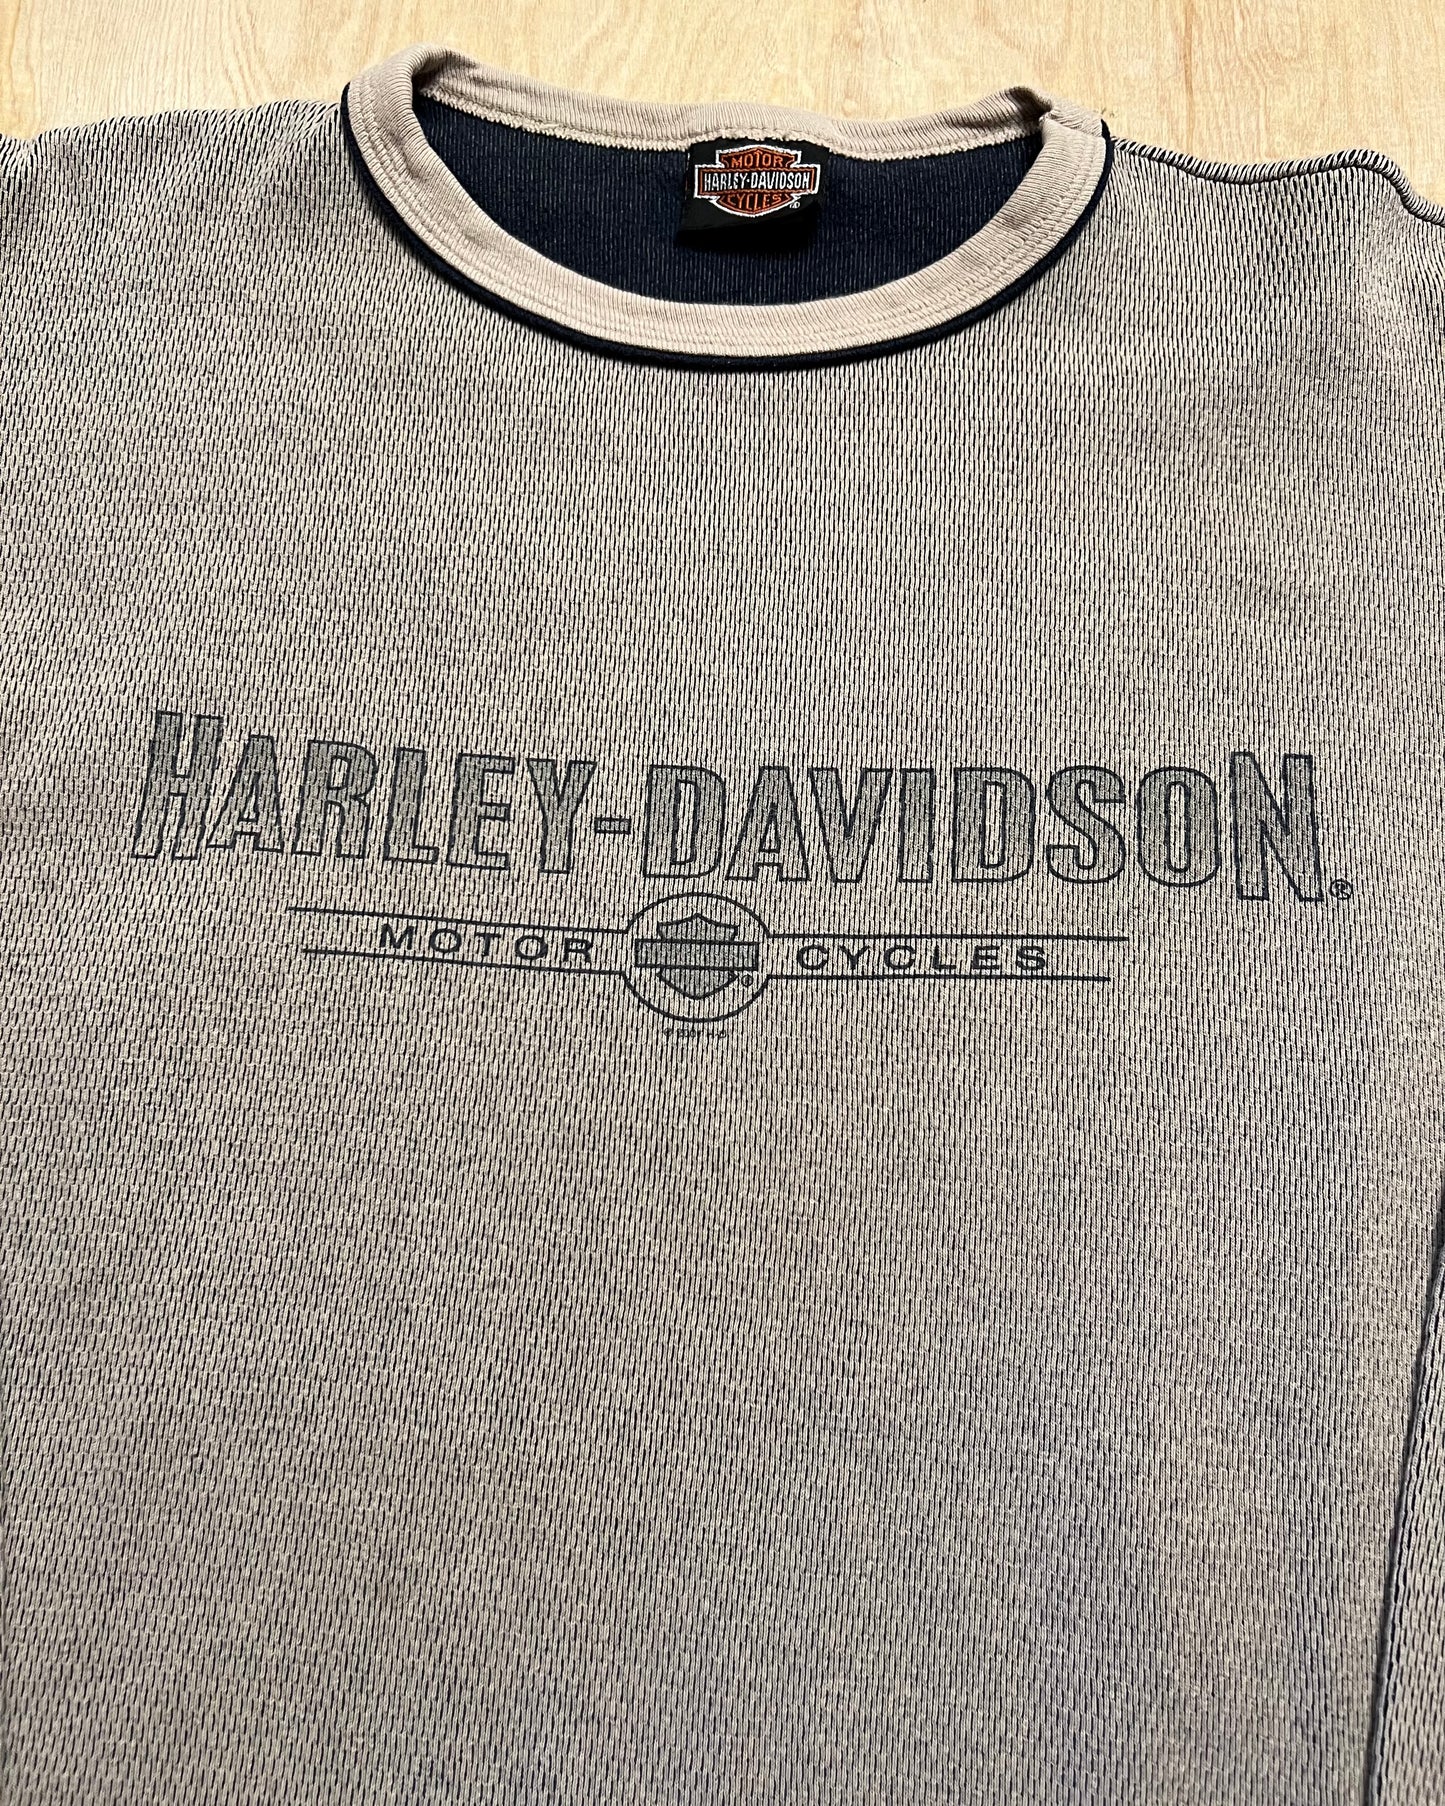 Vintage Harley Davidson Thermal Long Sleeve Shirt